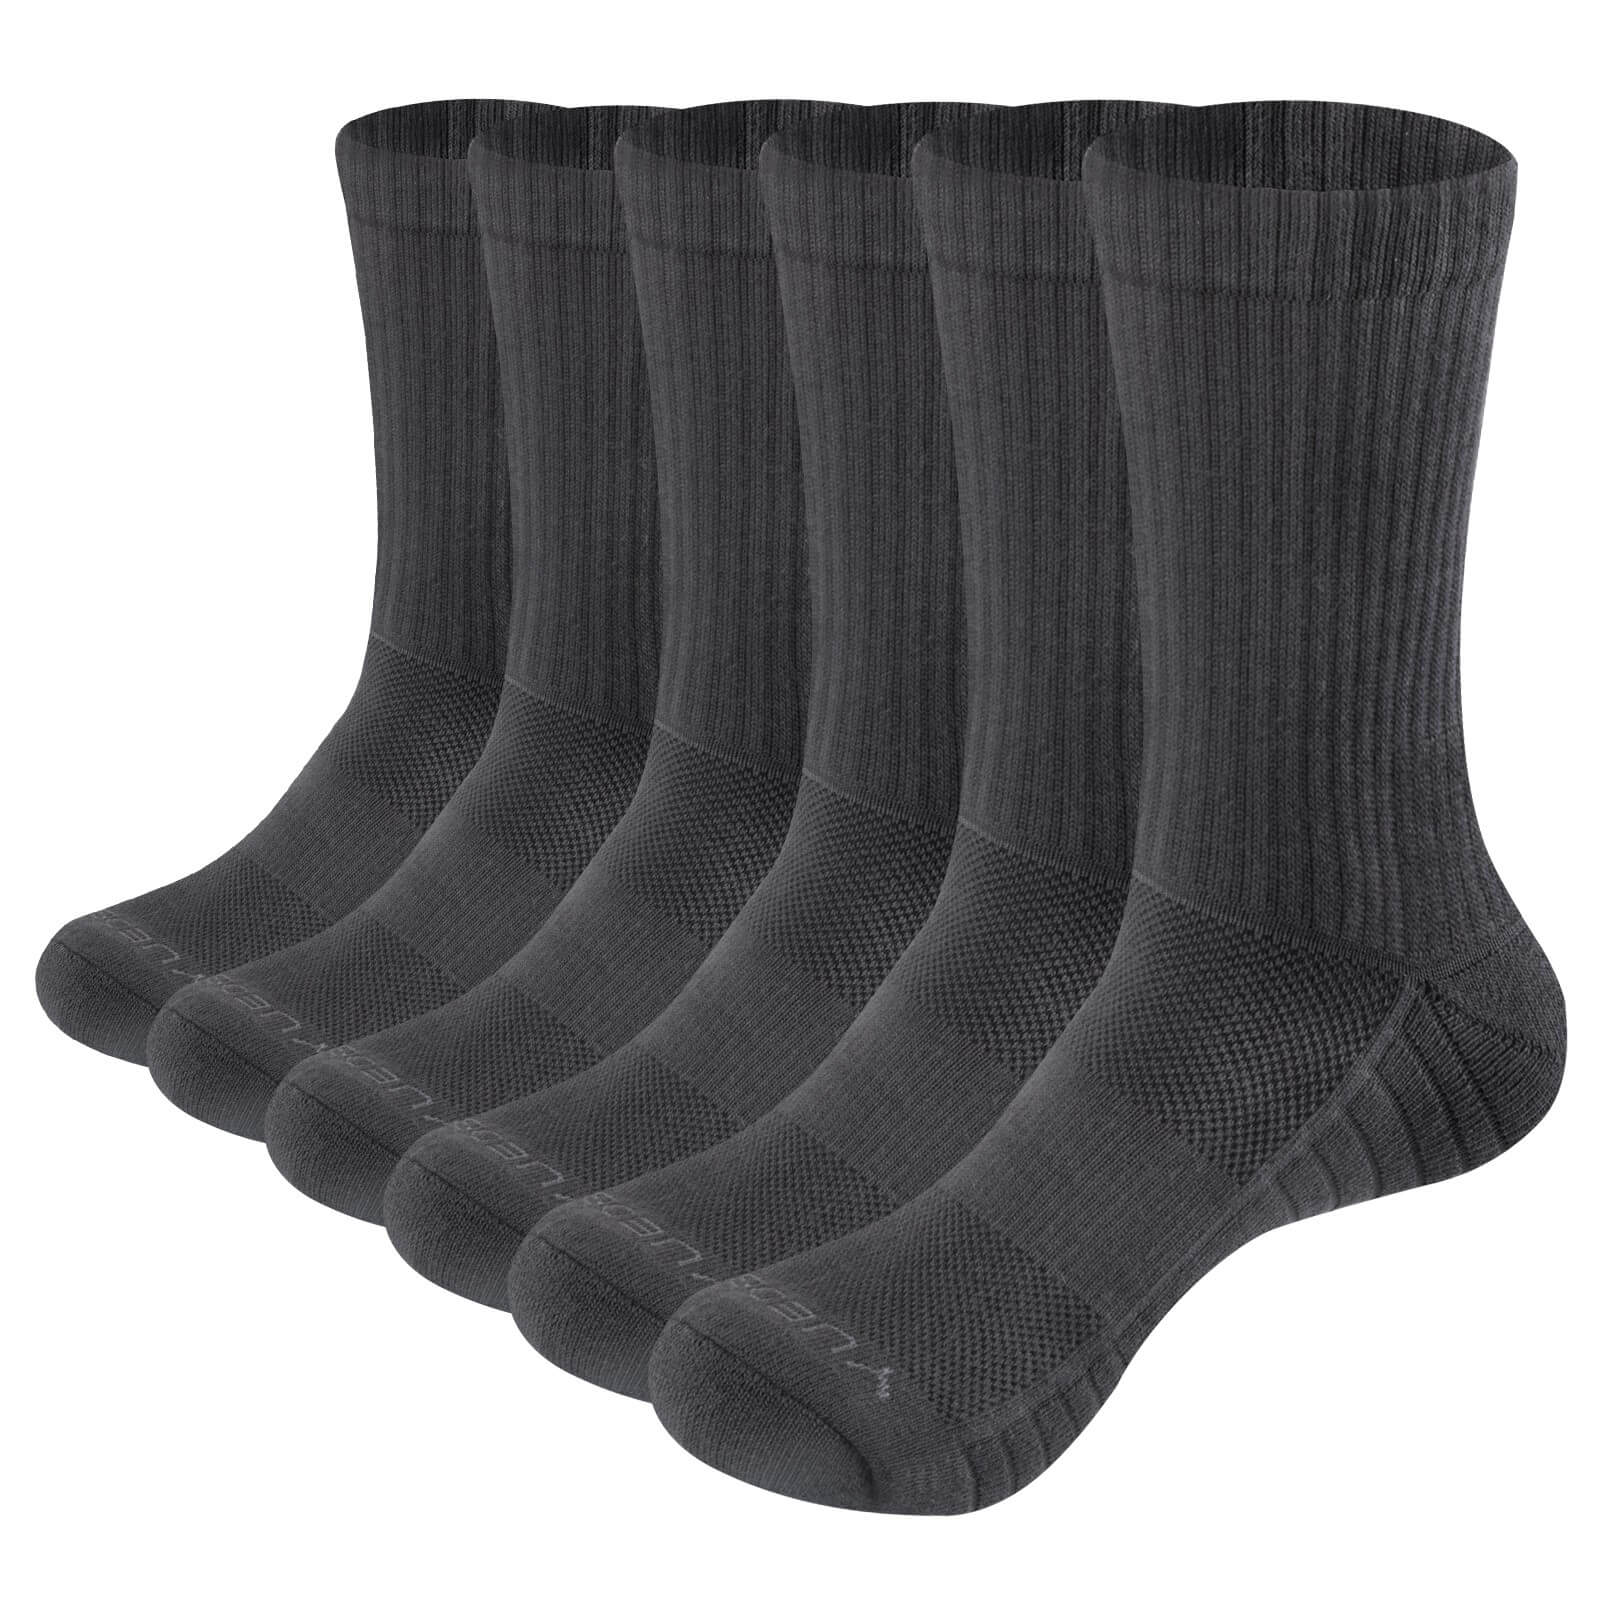 Maven Athletic Cotton Crew Socks 5 Pairs